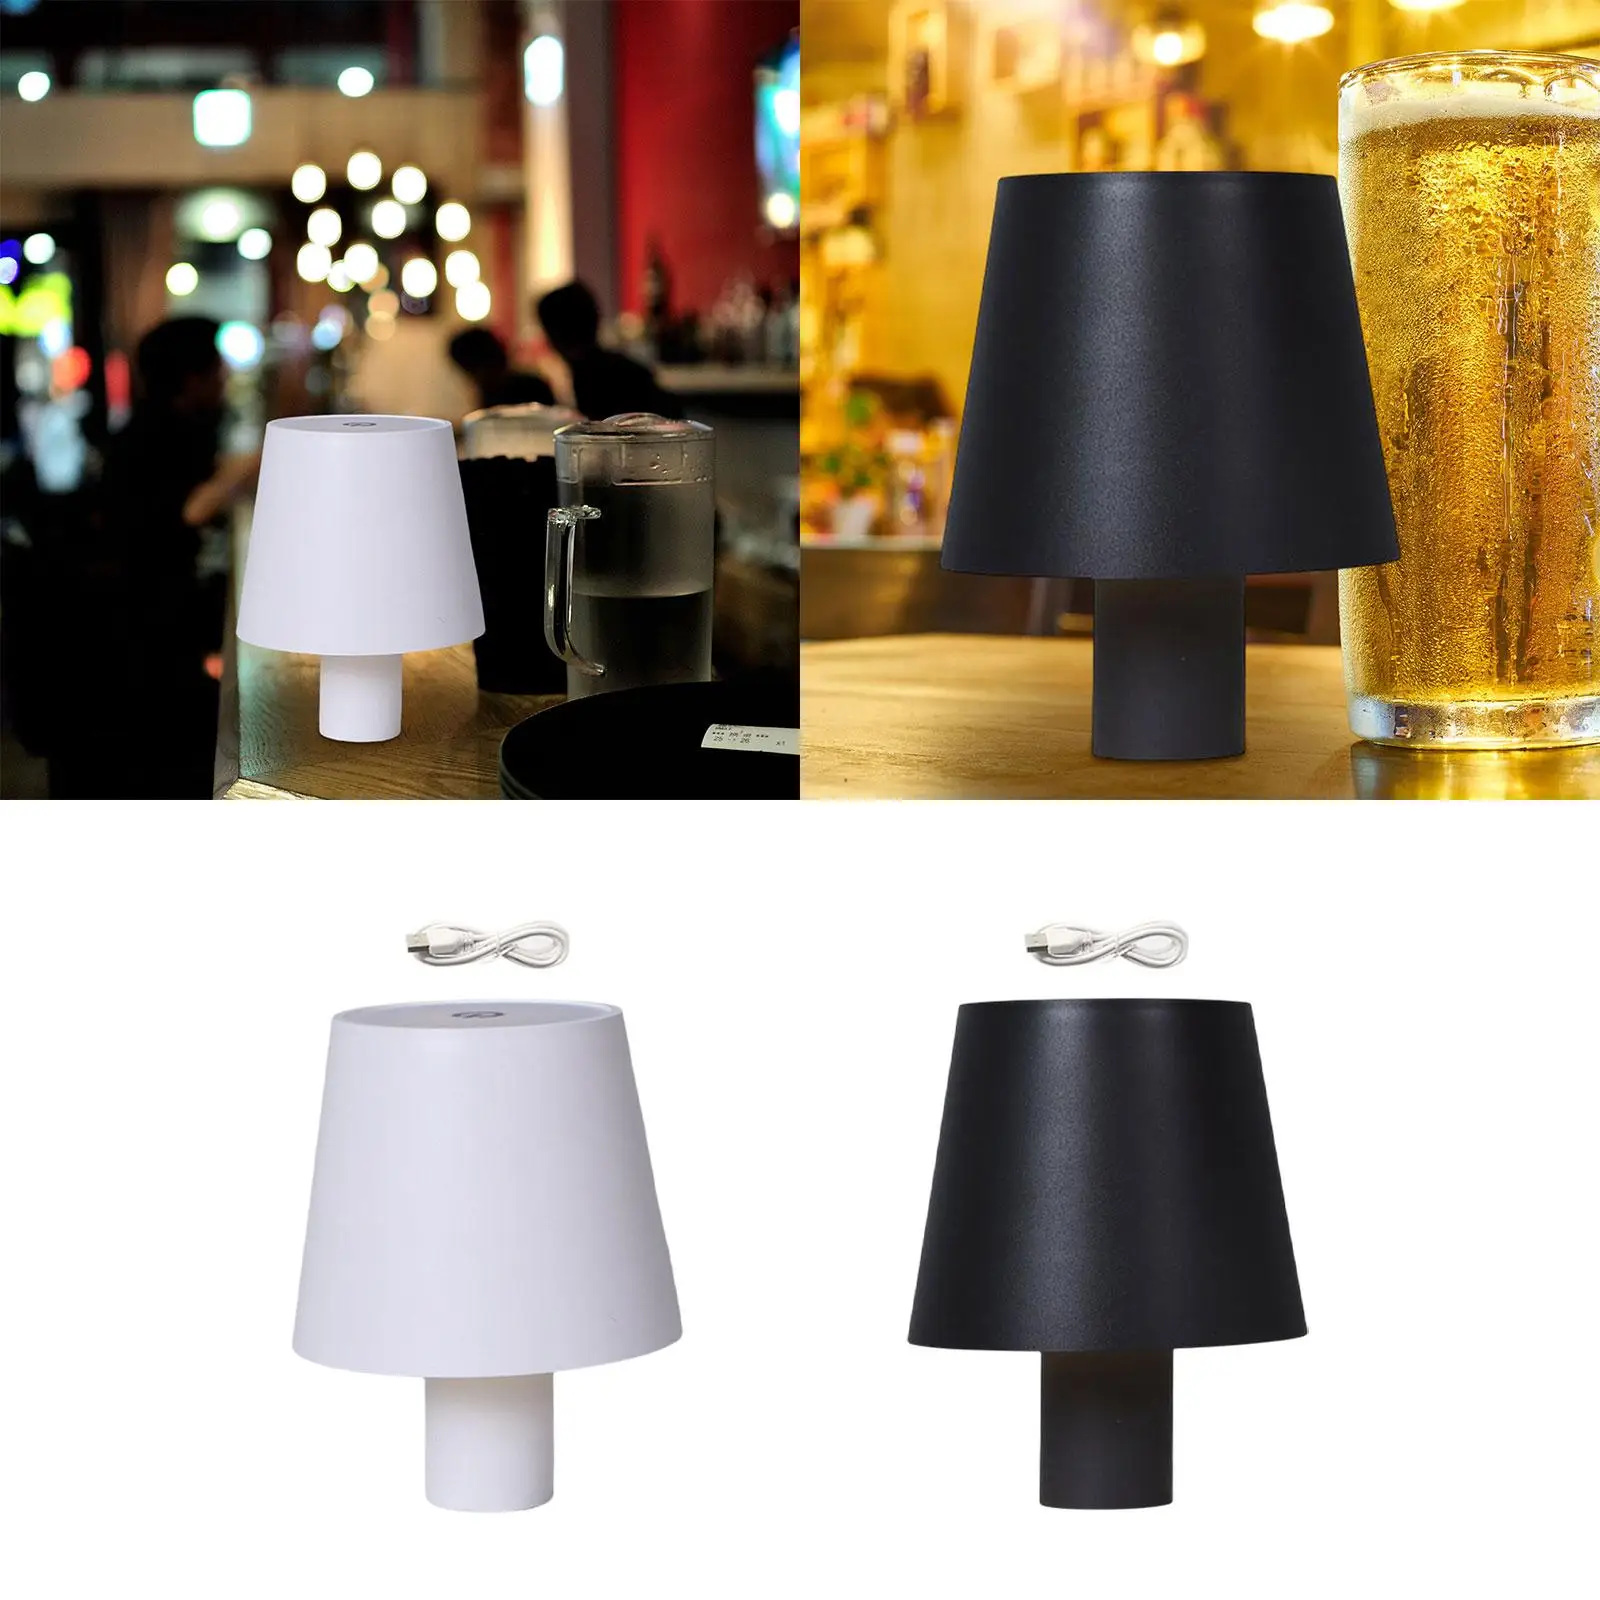 LED Bedside Table Lamp Rechargeable Creative Night Light Desk Lamp for Dorm Kids Room Bedroom Living Room